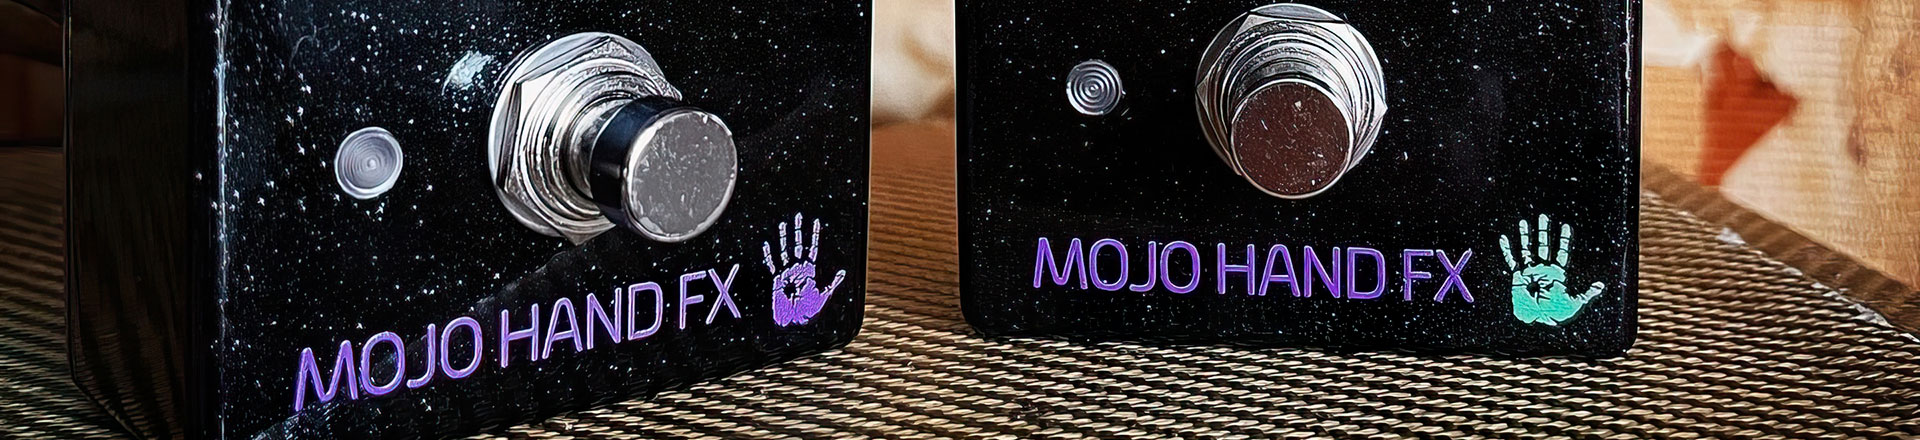 Mojo Hand FX Octaverse - Absolutny oryginał na rynku